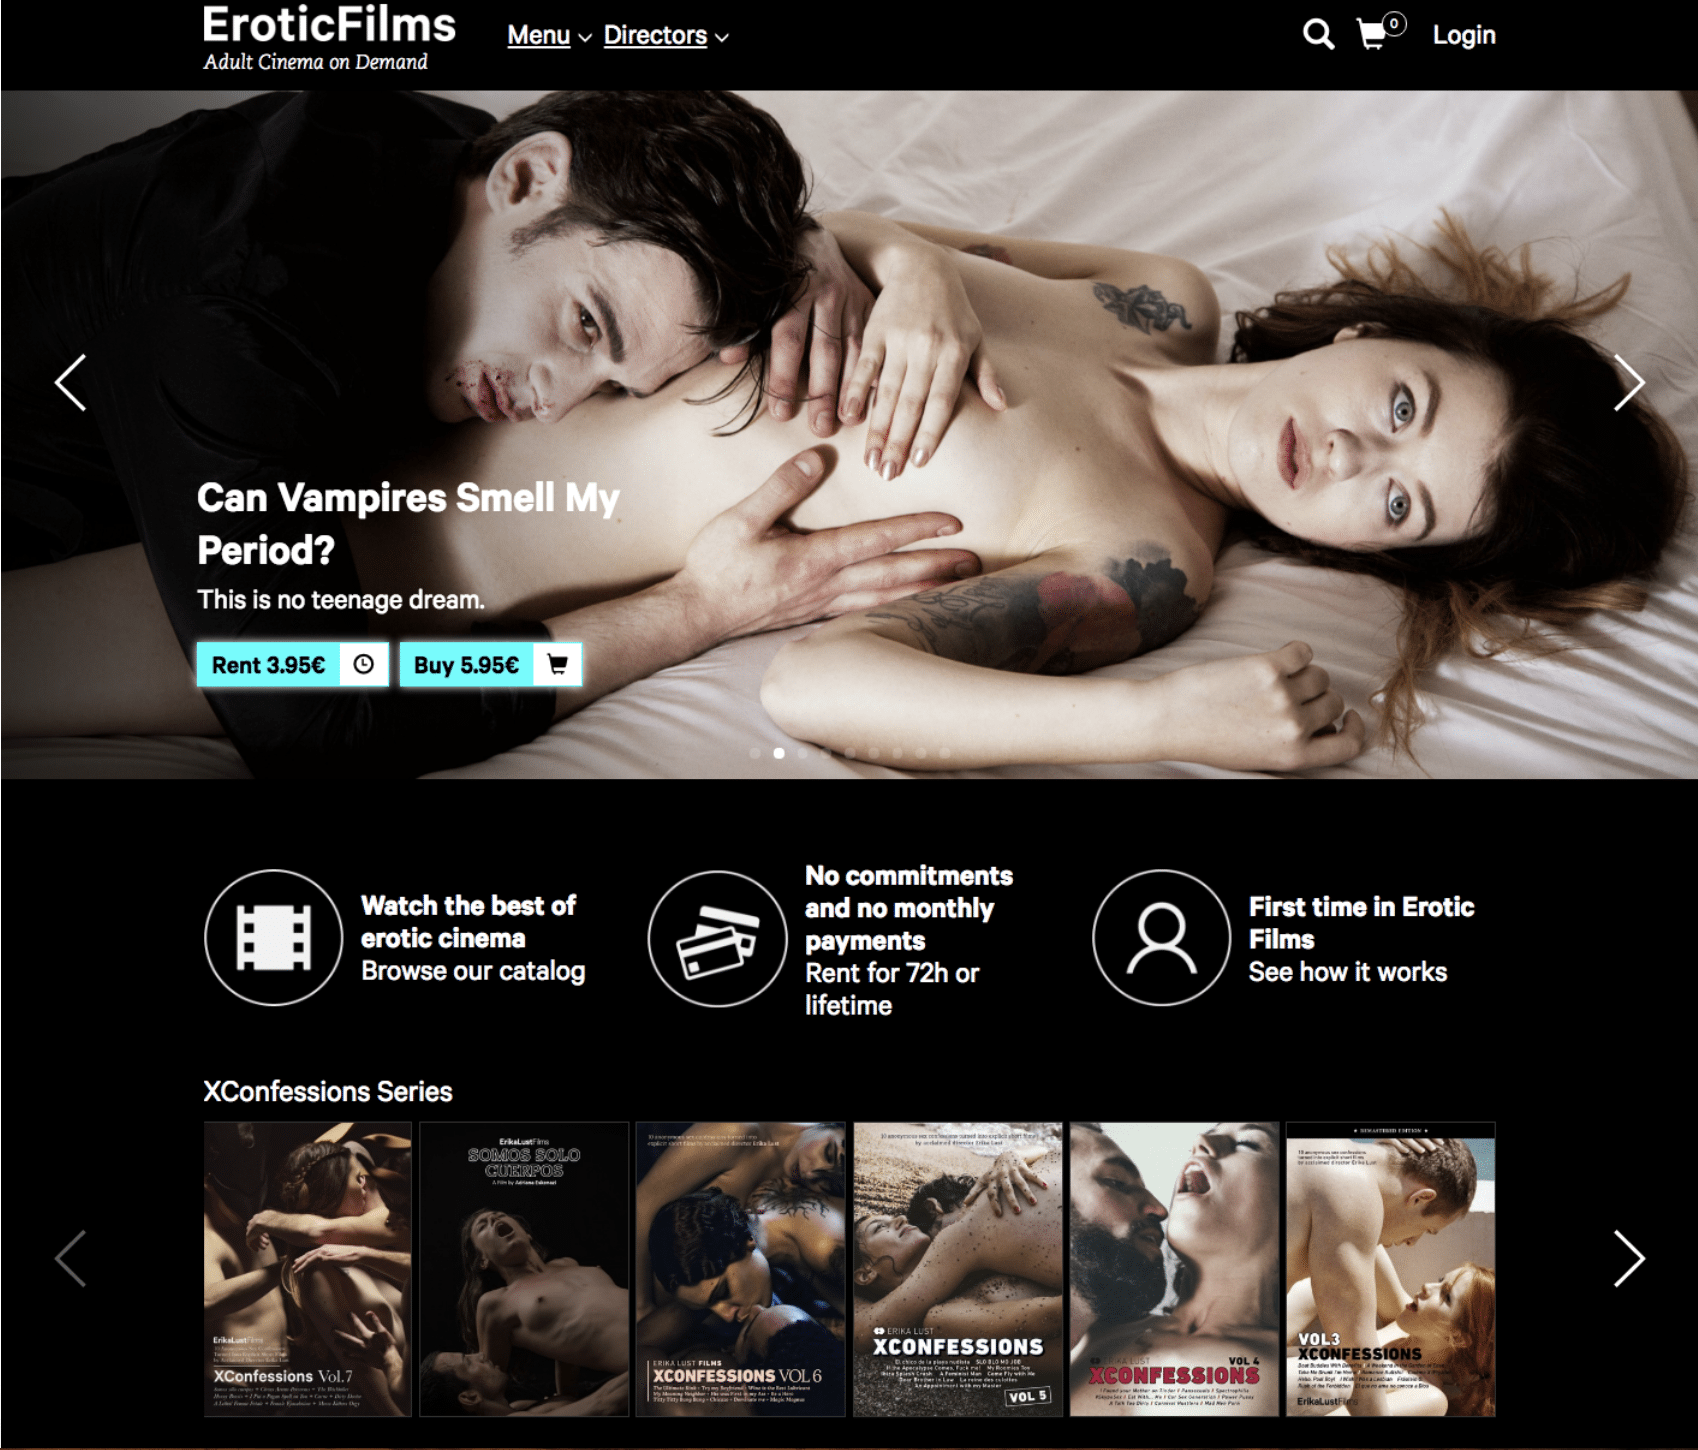 Erotic Films Website Review